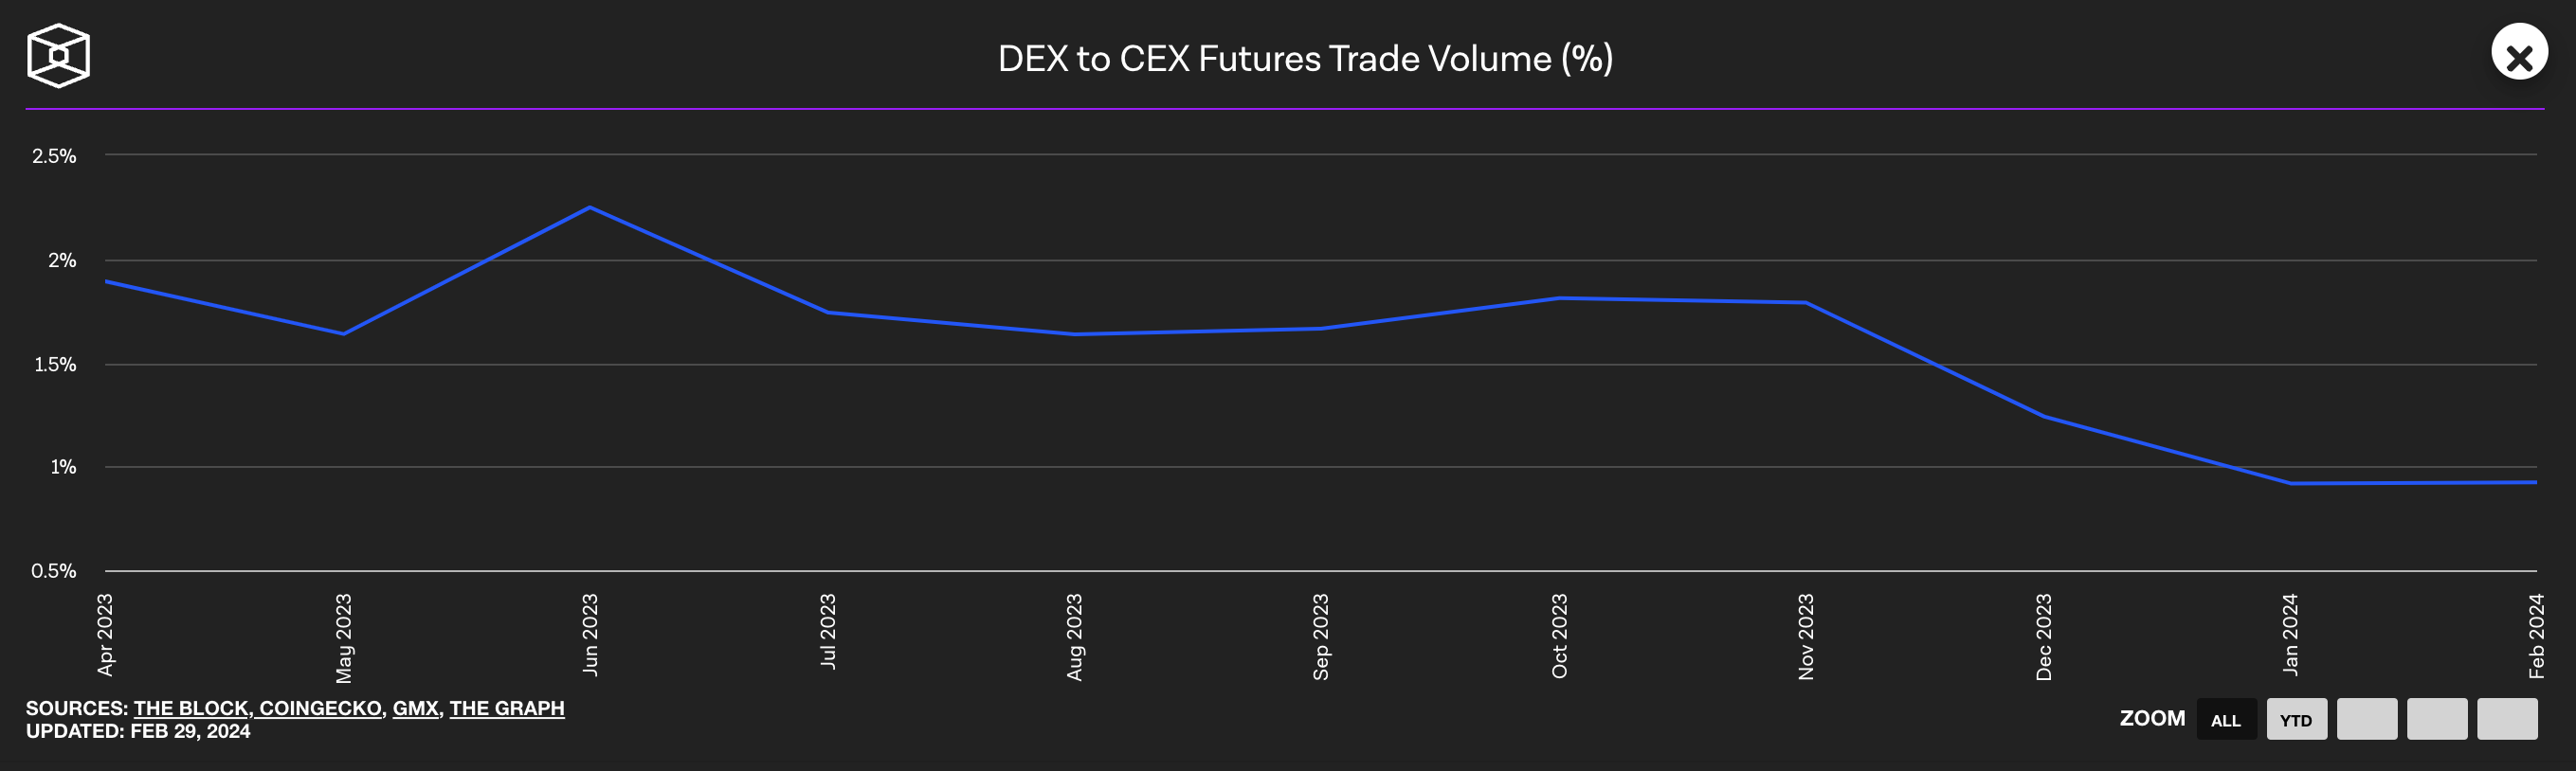 DEX to CEX Futures Trade Volume, Source: The Block